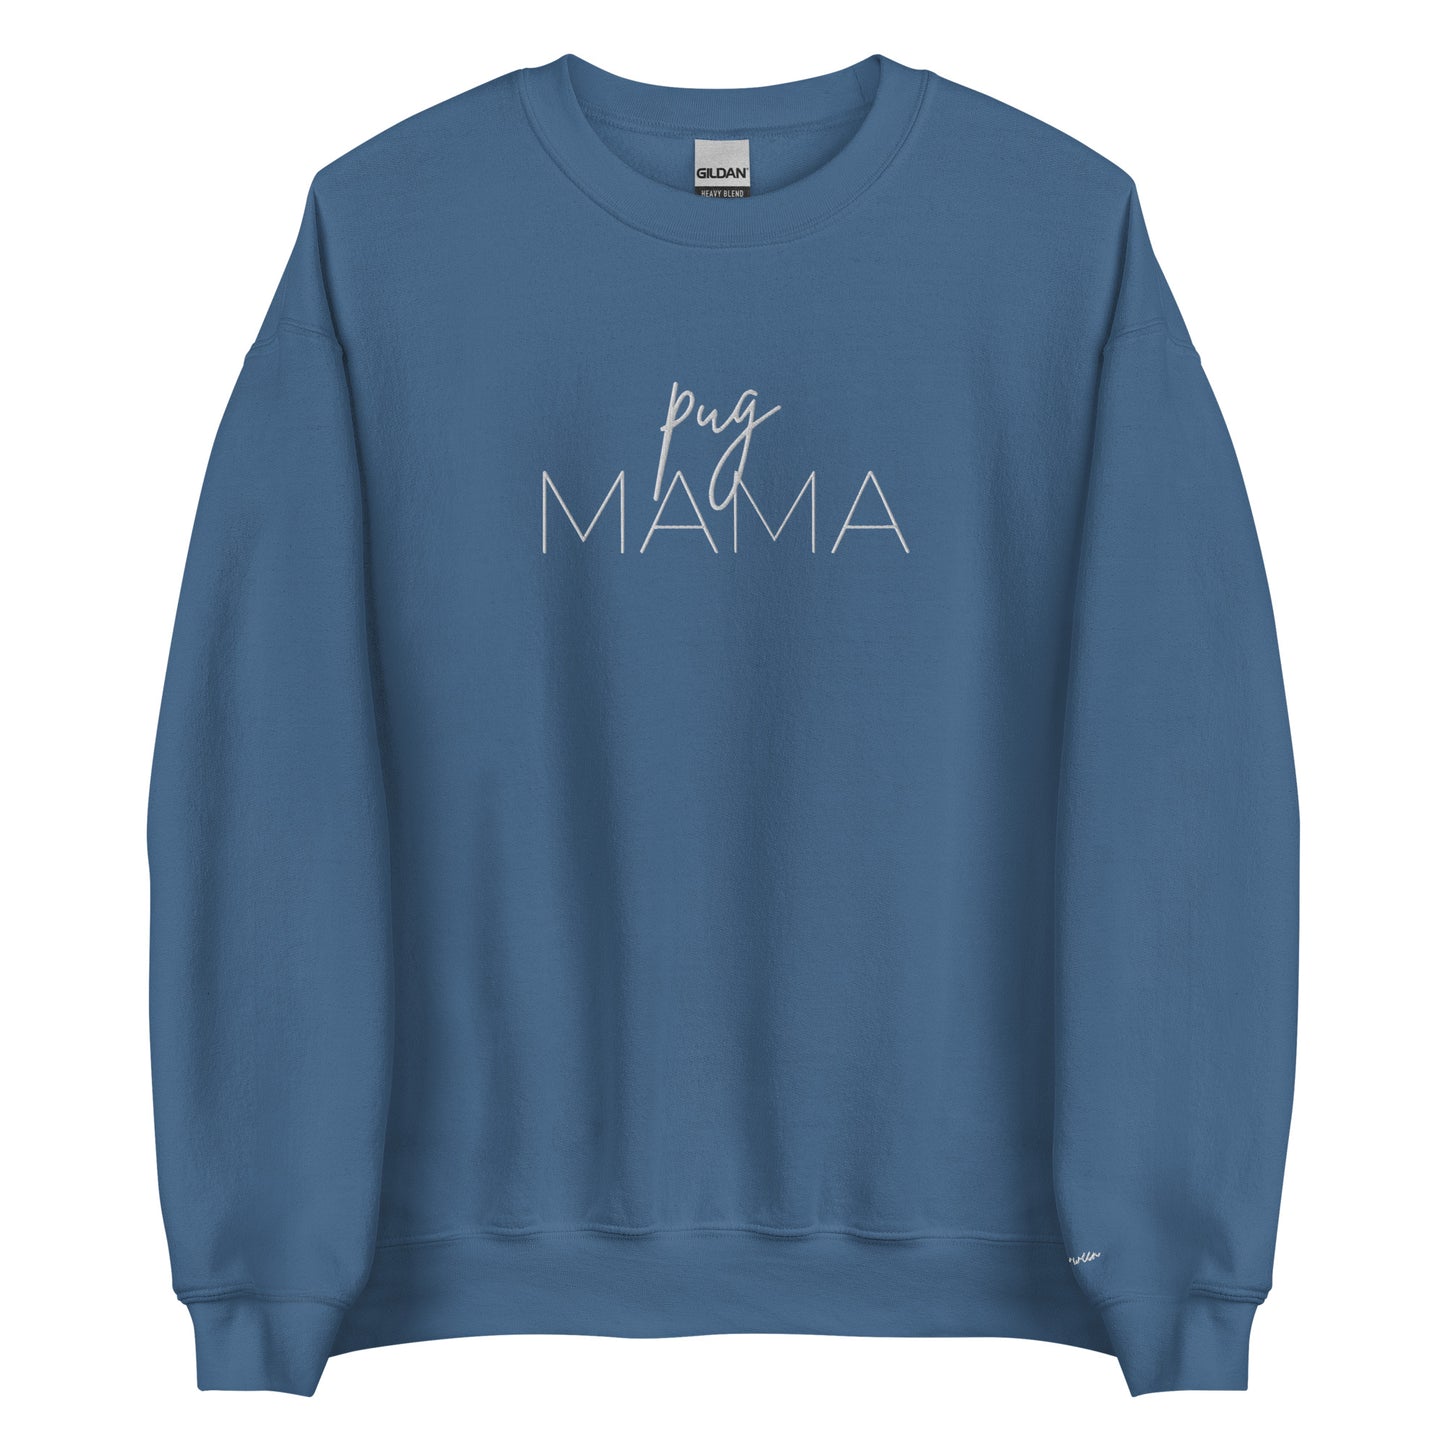 Embroidered Sweatshirt - PUG MAMA